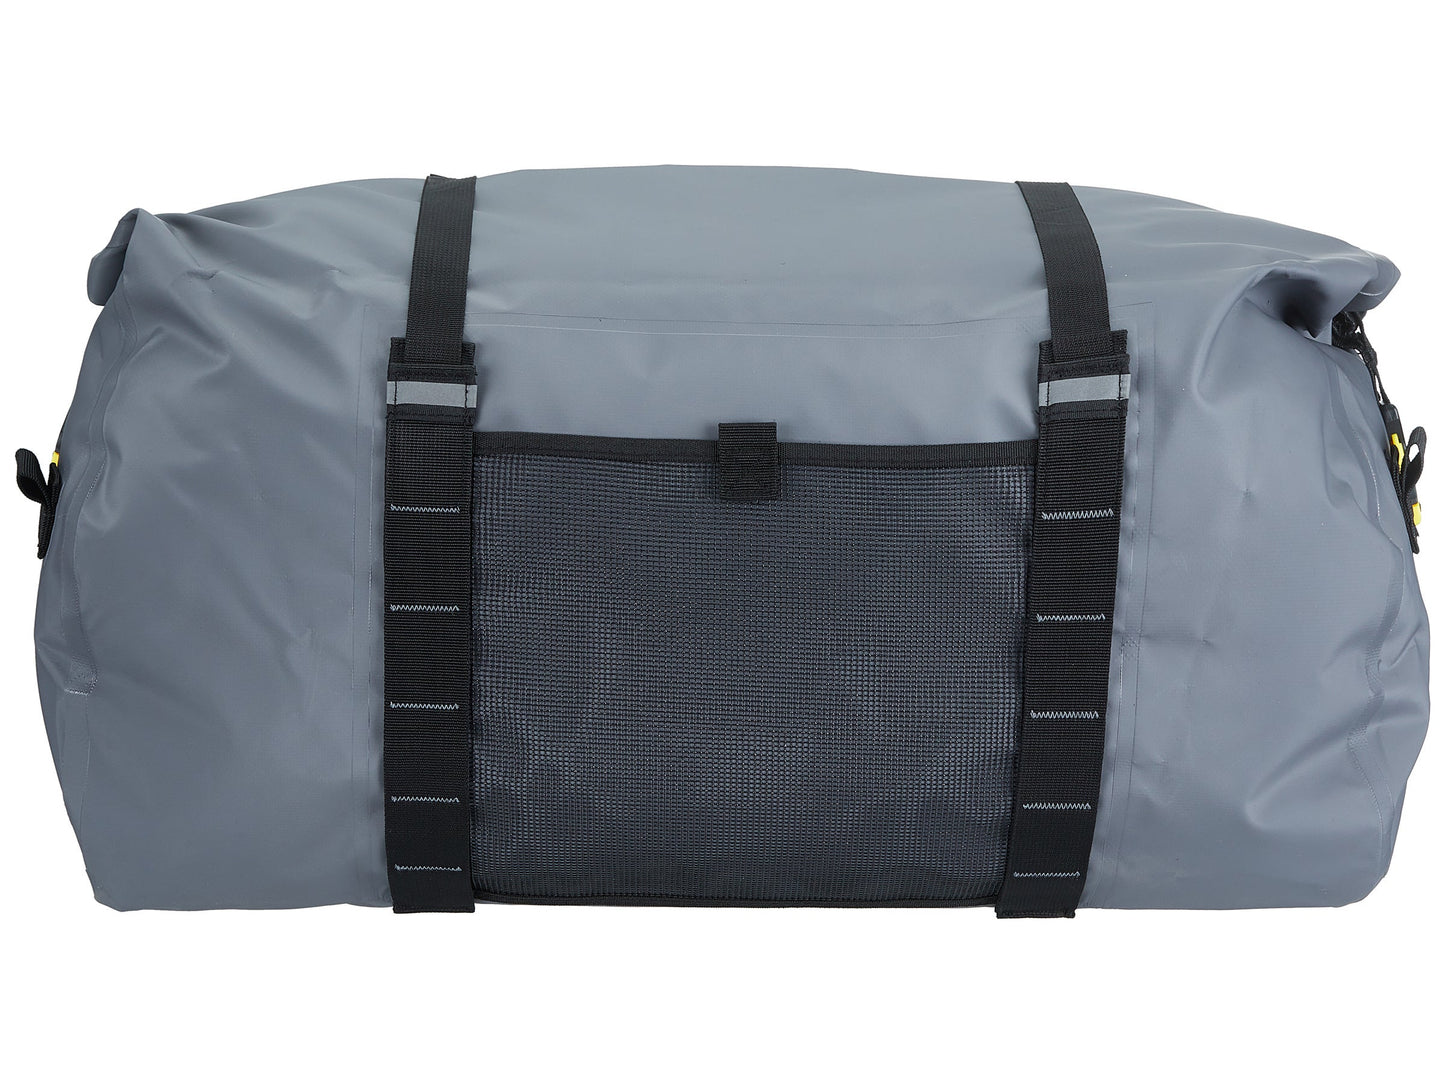 Fishing and Tackle Storage - Plano - Plano Z-Series Waterproof Duffle Bag